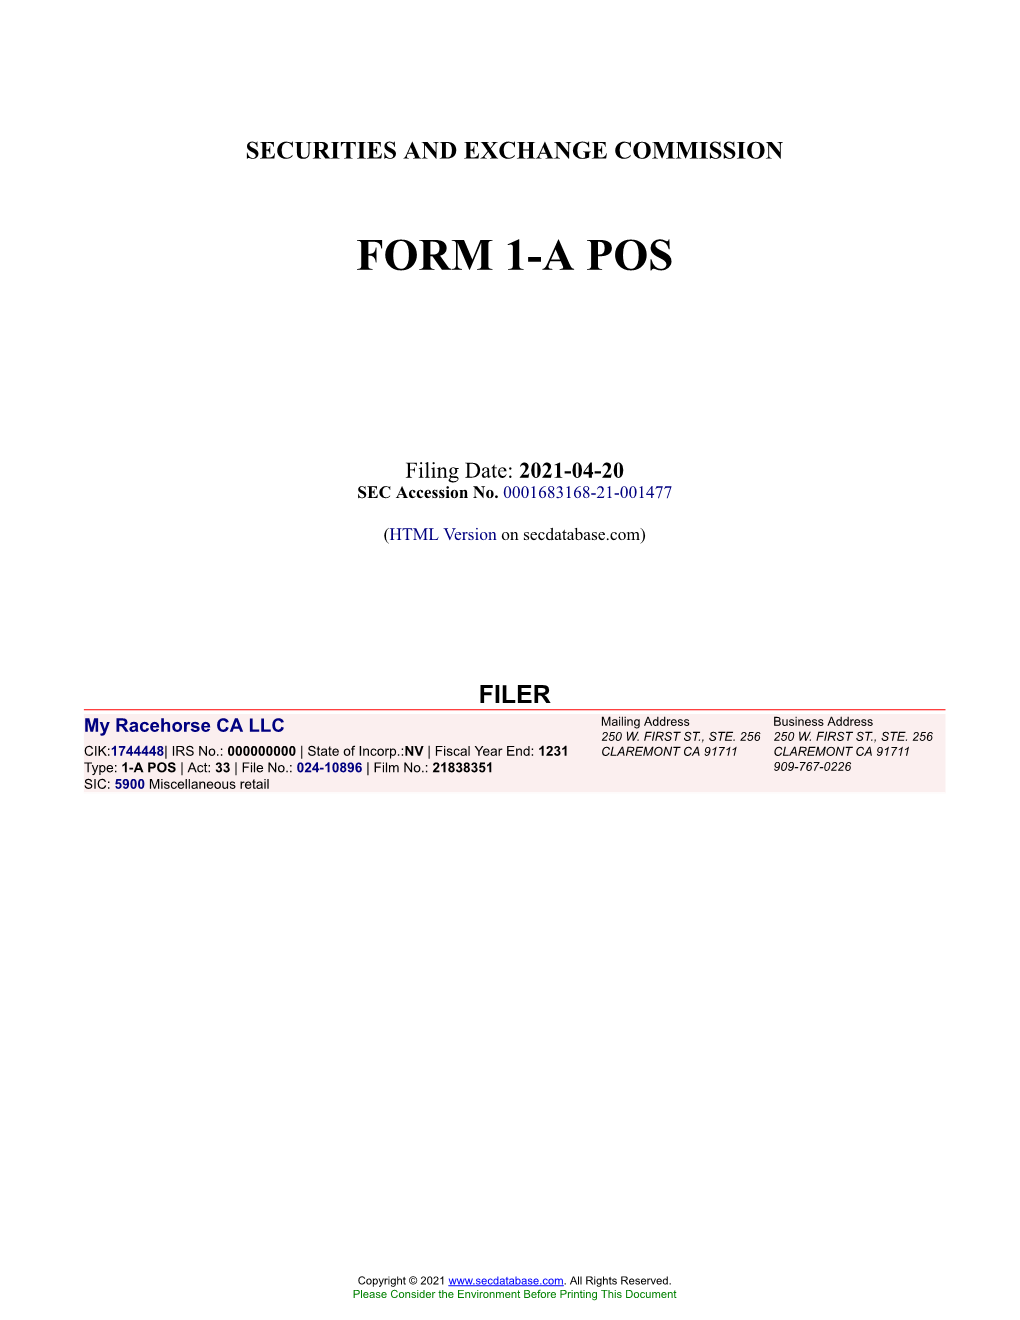 My Racehorse CA LLC Form 1-A POS Filed 2021-04-20